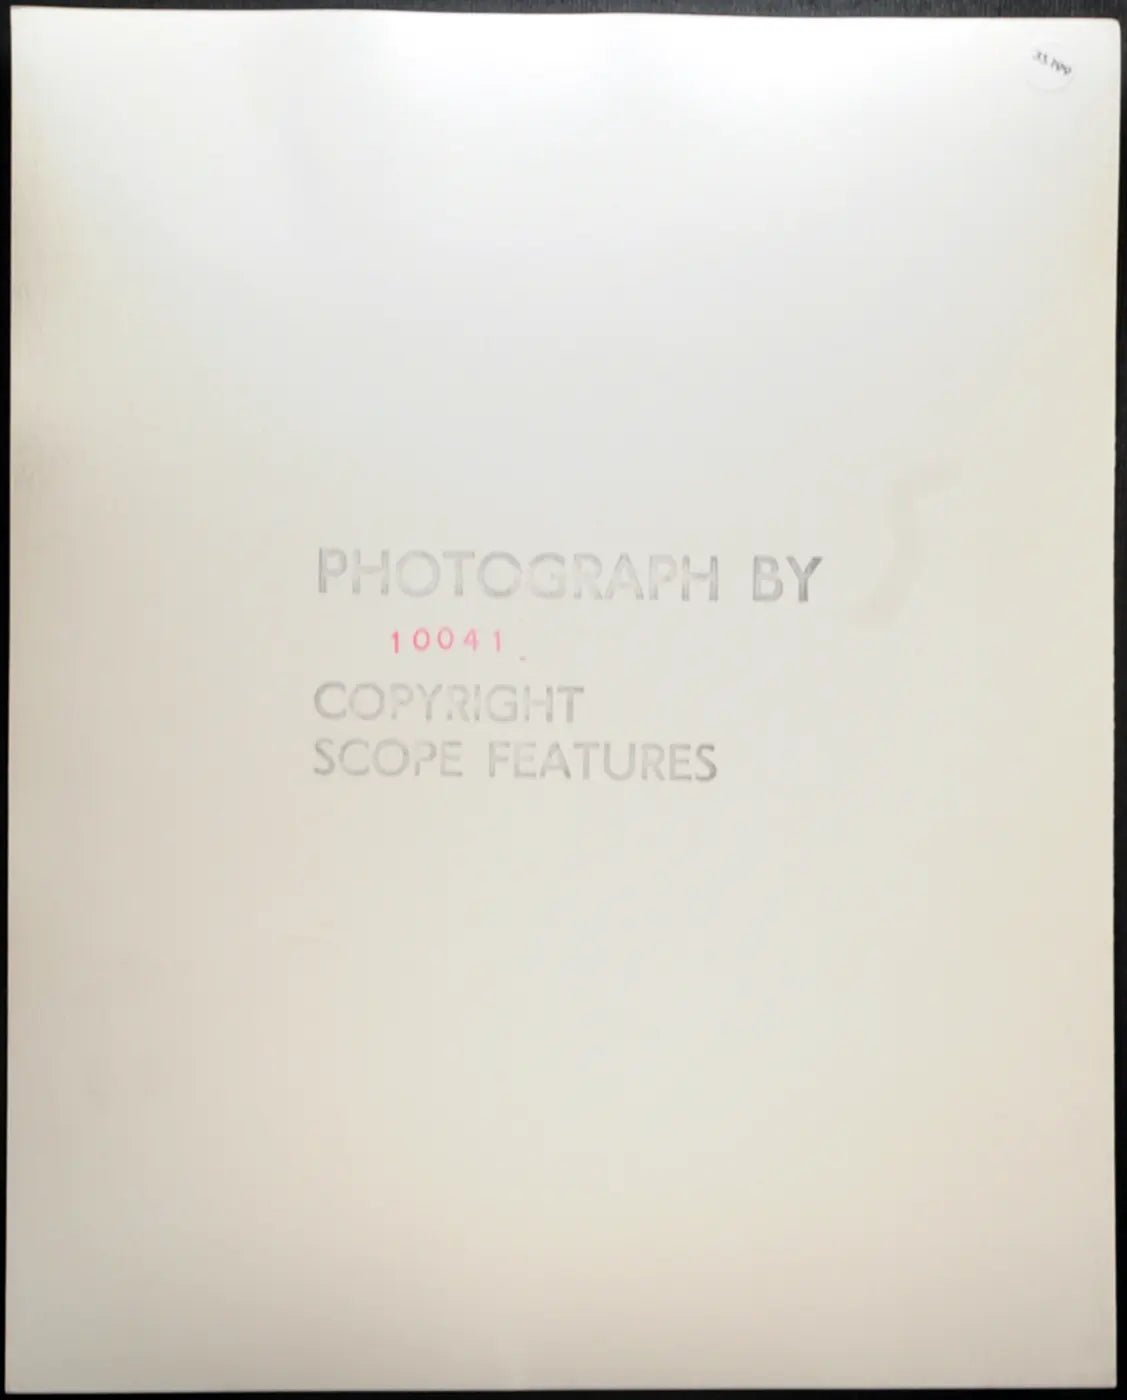 Nikki Debusse anni 70 Ft 35199 - Stampa 20x25 cm - Farabola Stampa ai sali d'argento